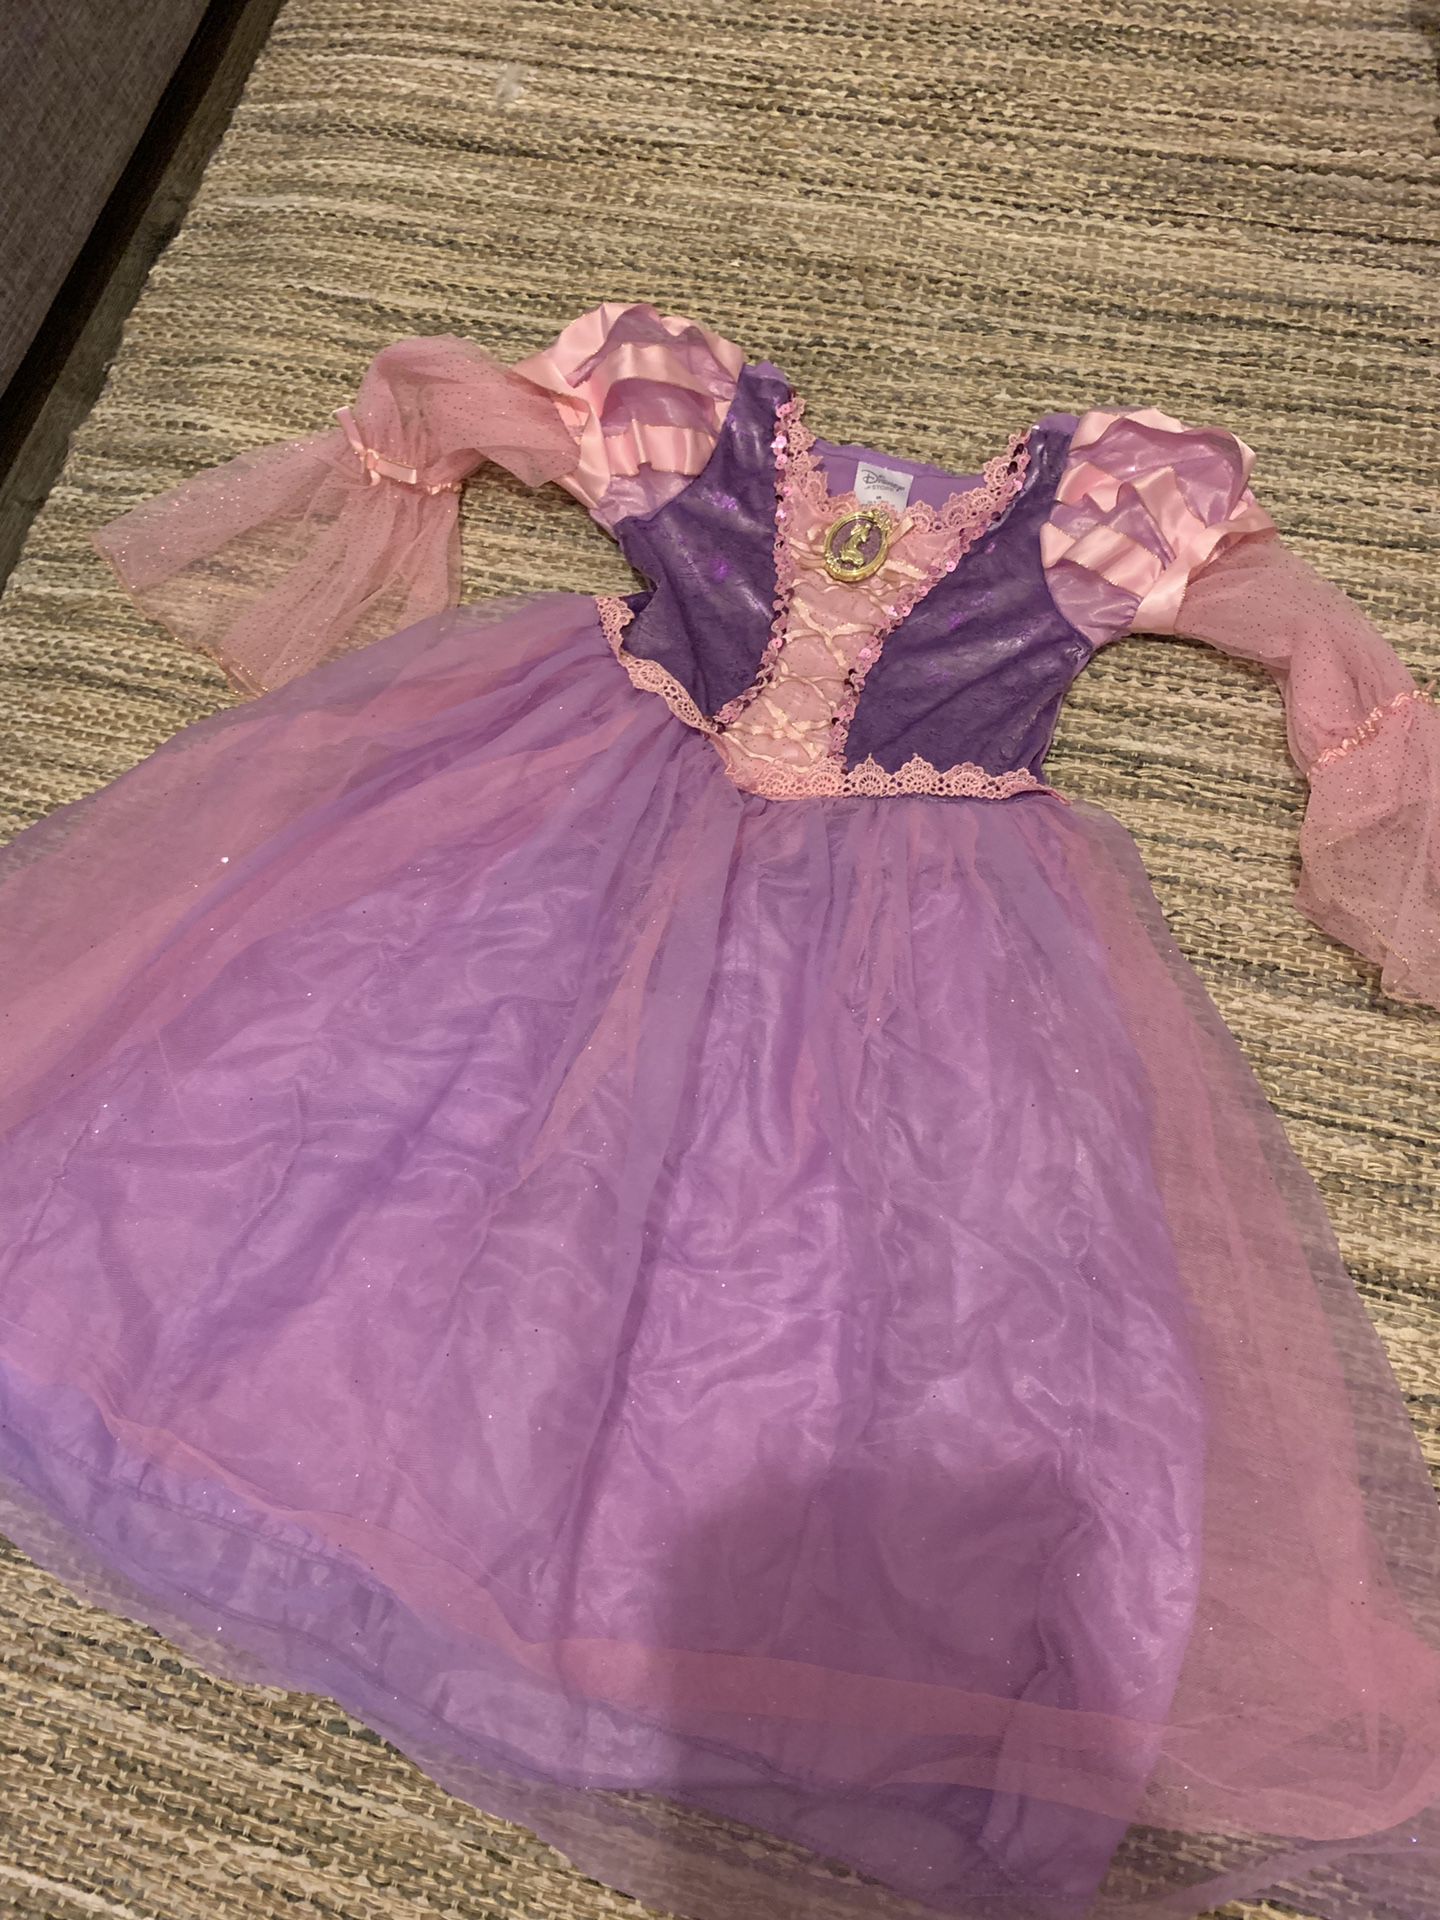 Princess Rapunzel Disney store costume/dress up